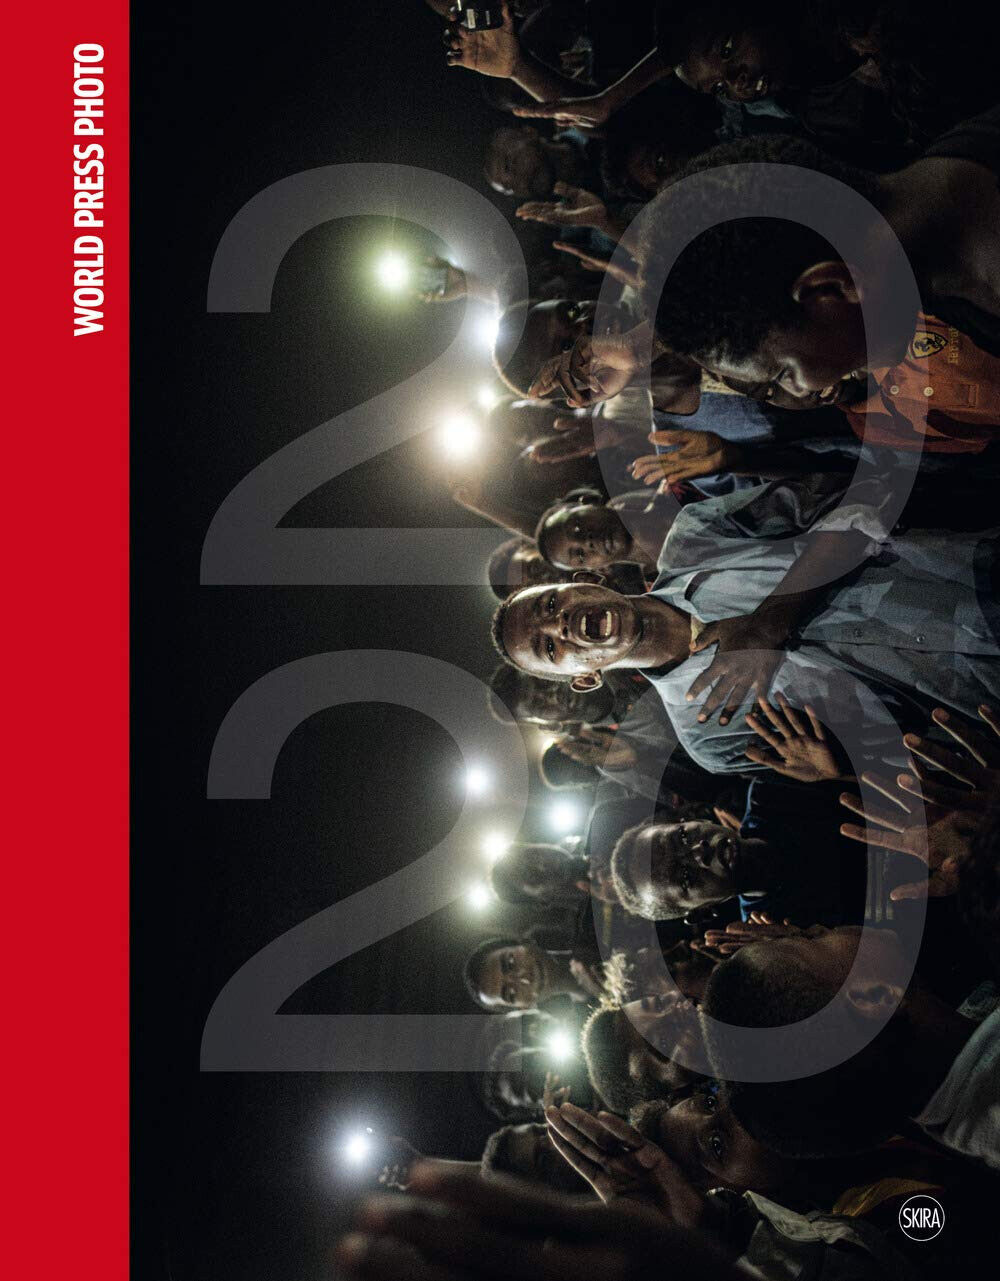 World Press Photo 2020. Ediz. a colori - Skira - 2020